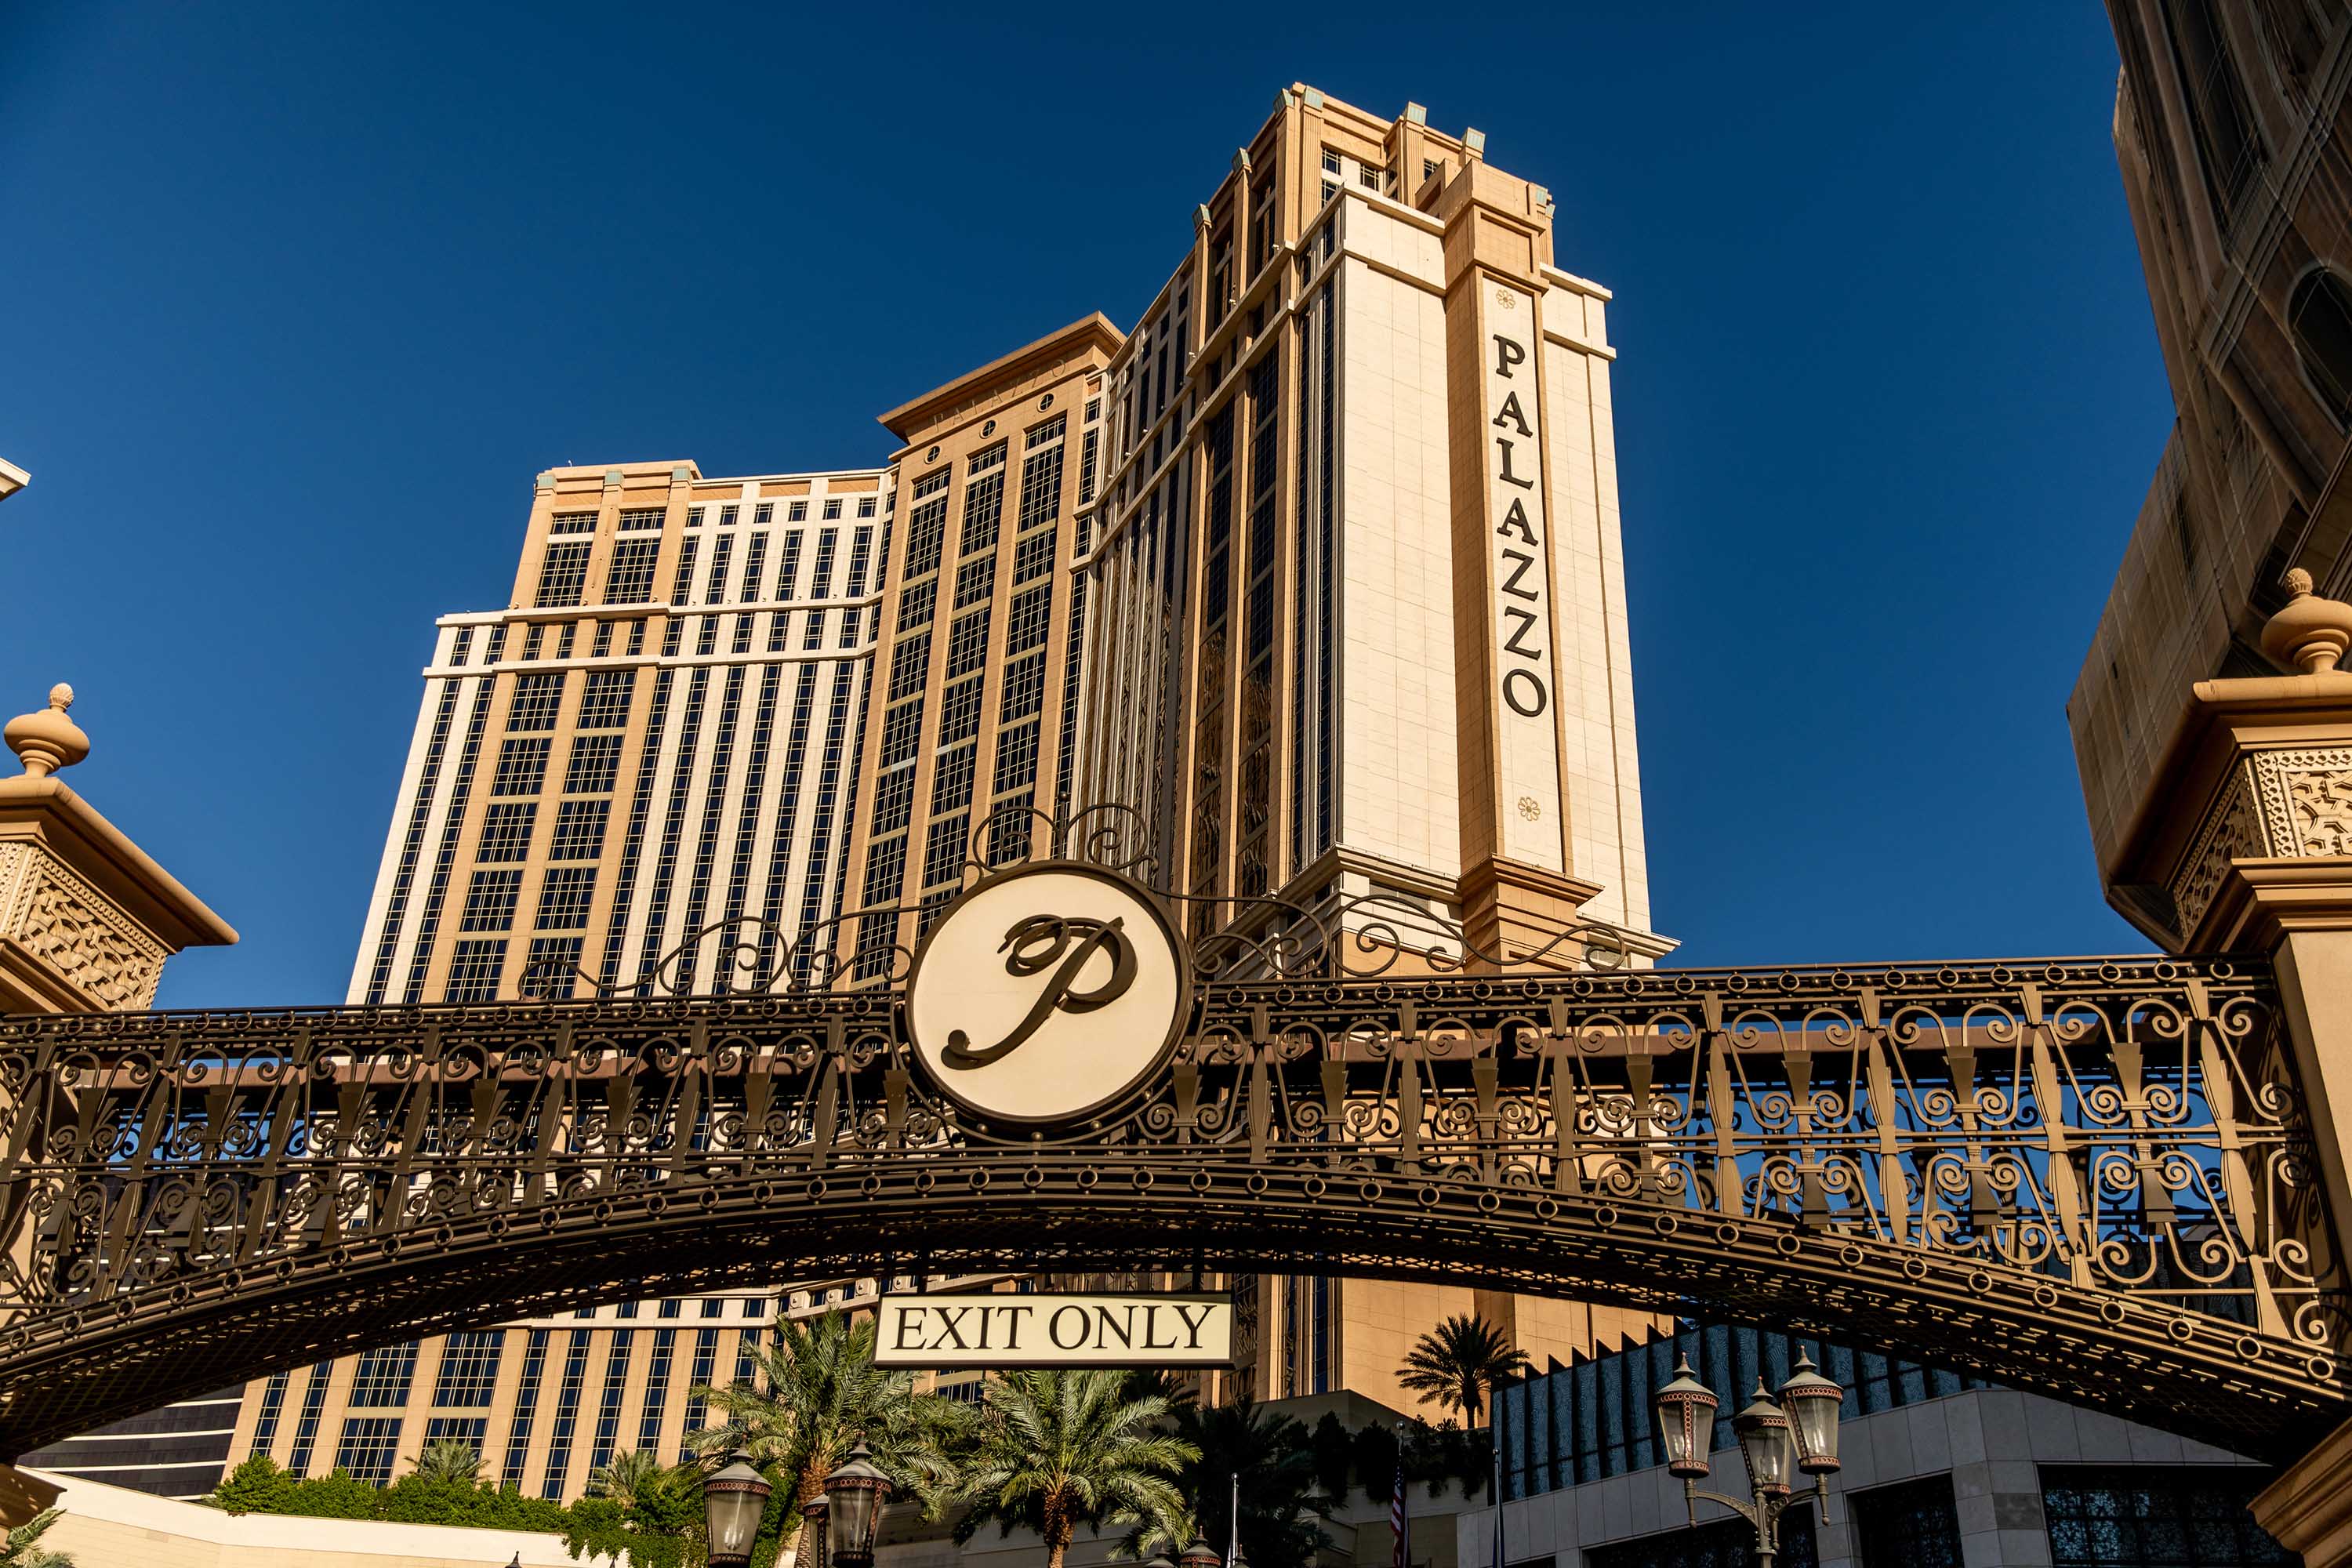 Las Vegas Sands sells its casinos in $6 billion deal